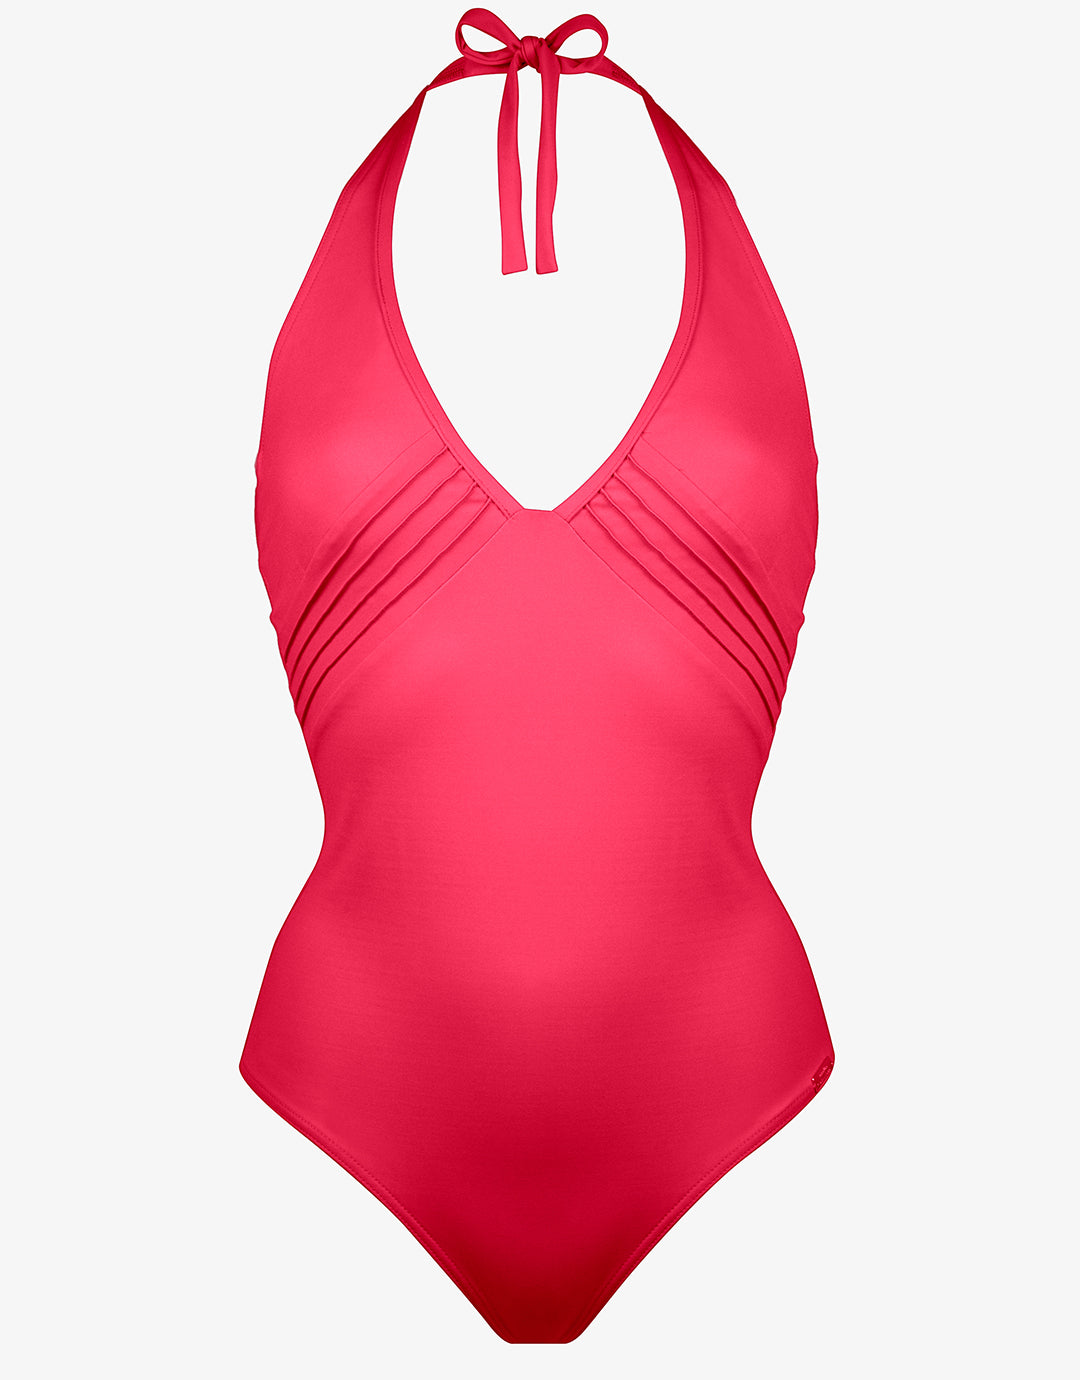 Softline Plunge Halter Swimsuit - Watermelon - Simply Beach UK